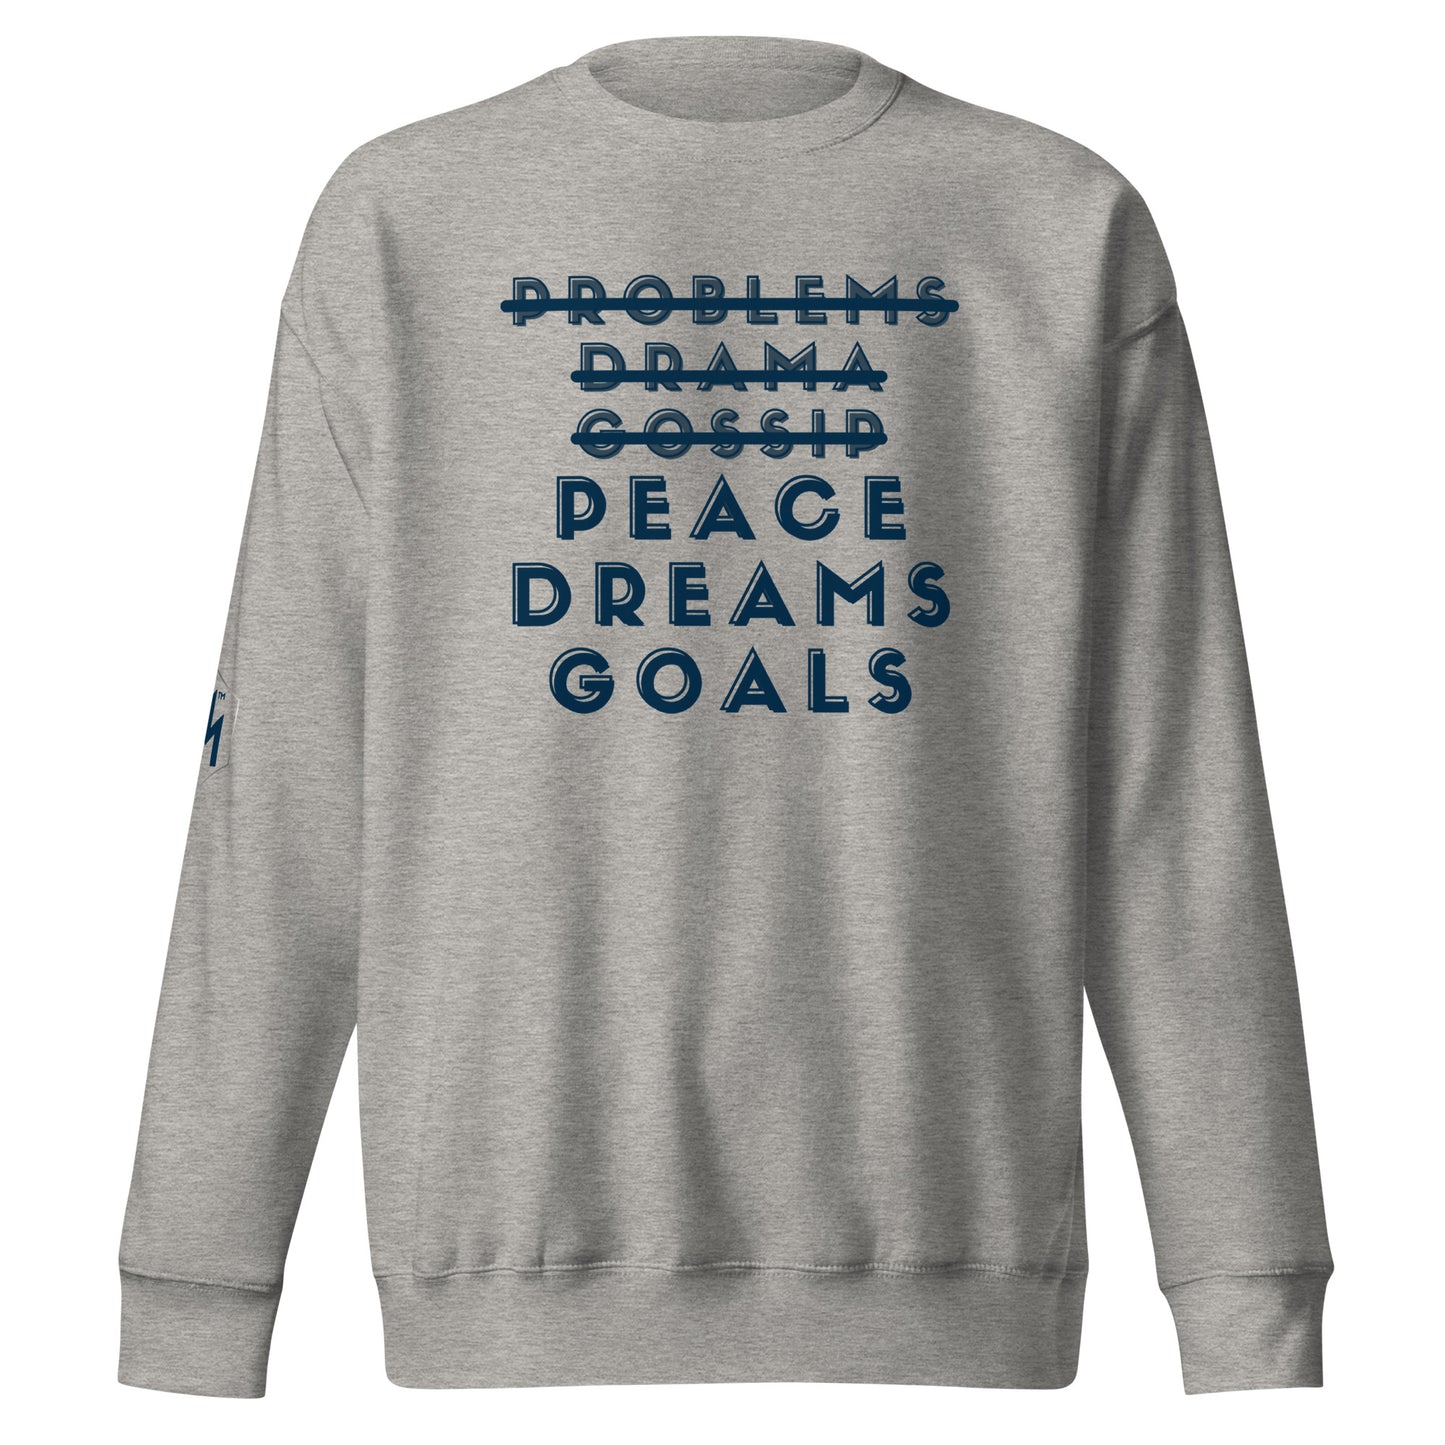 Peace Dreams Goals Sweatshirt - Mono text